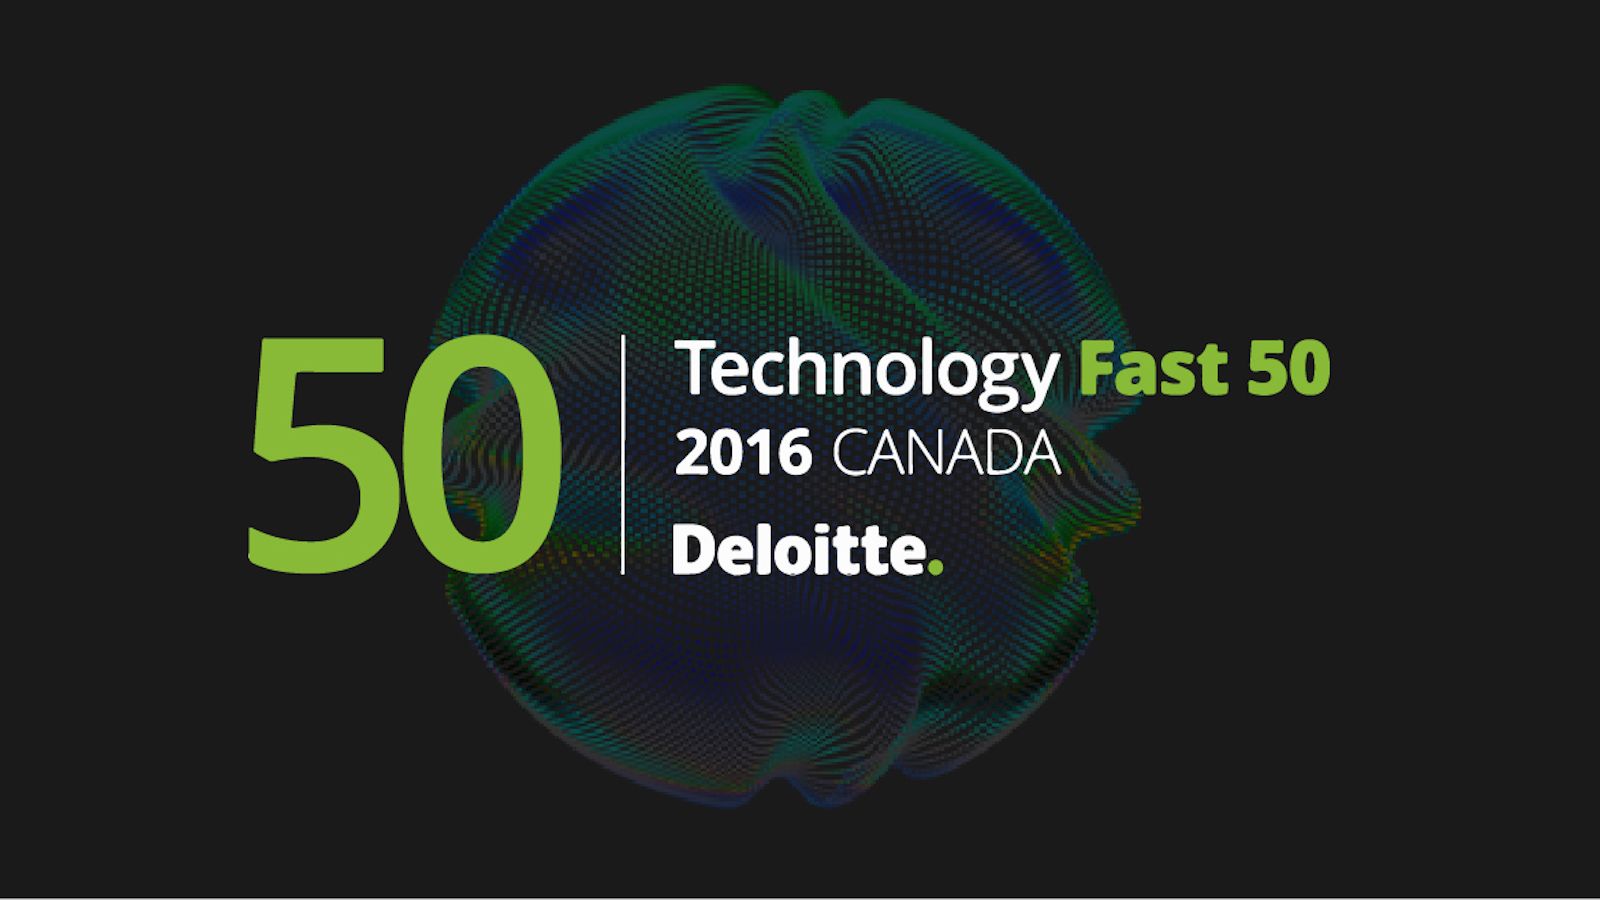 Deloitte Technology Fast 500 2016 Award logo